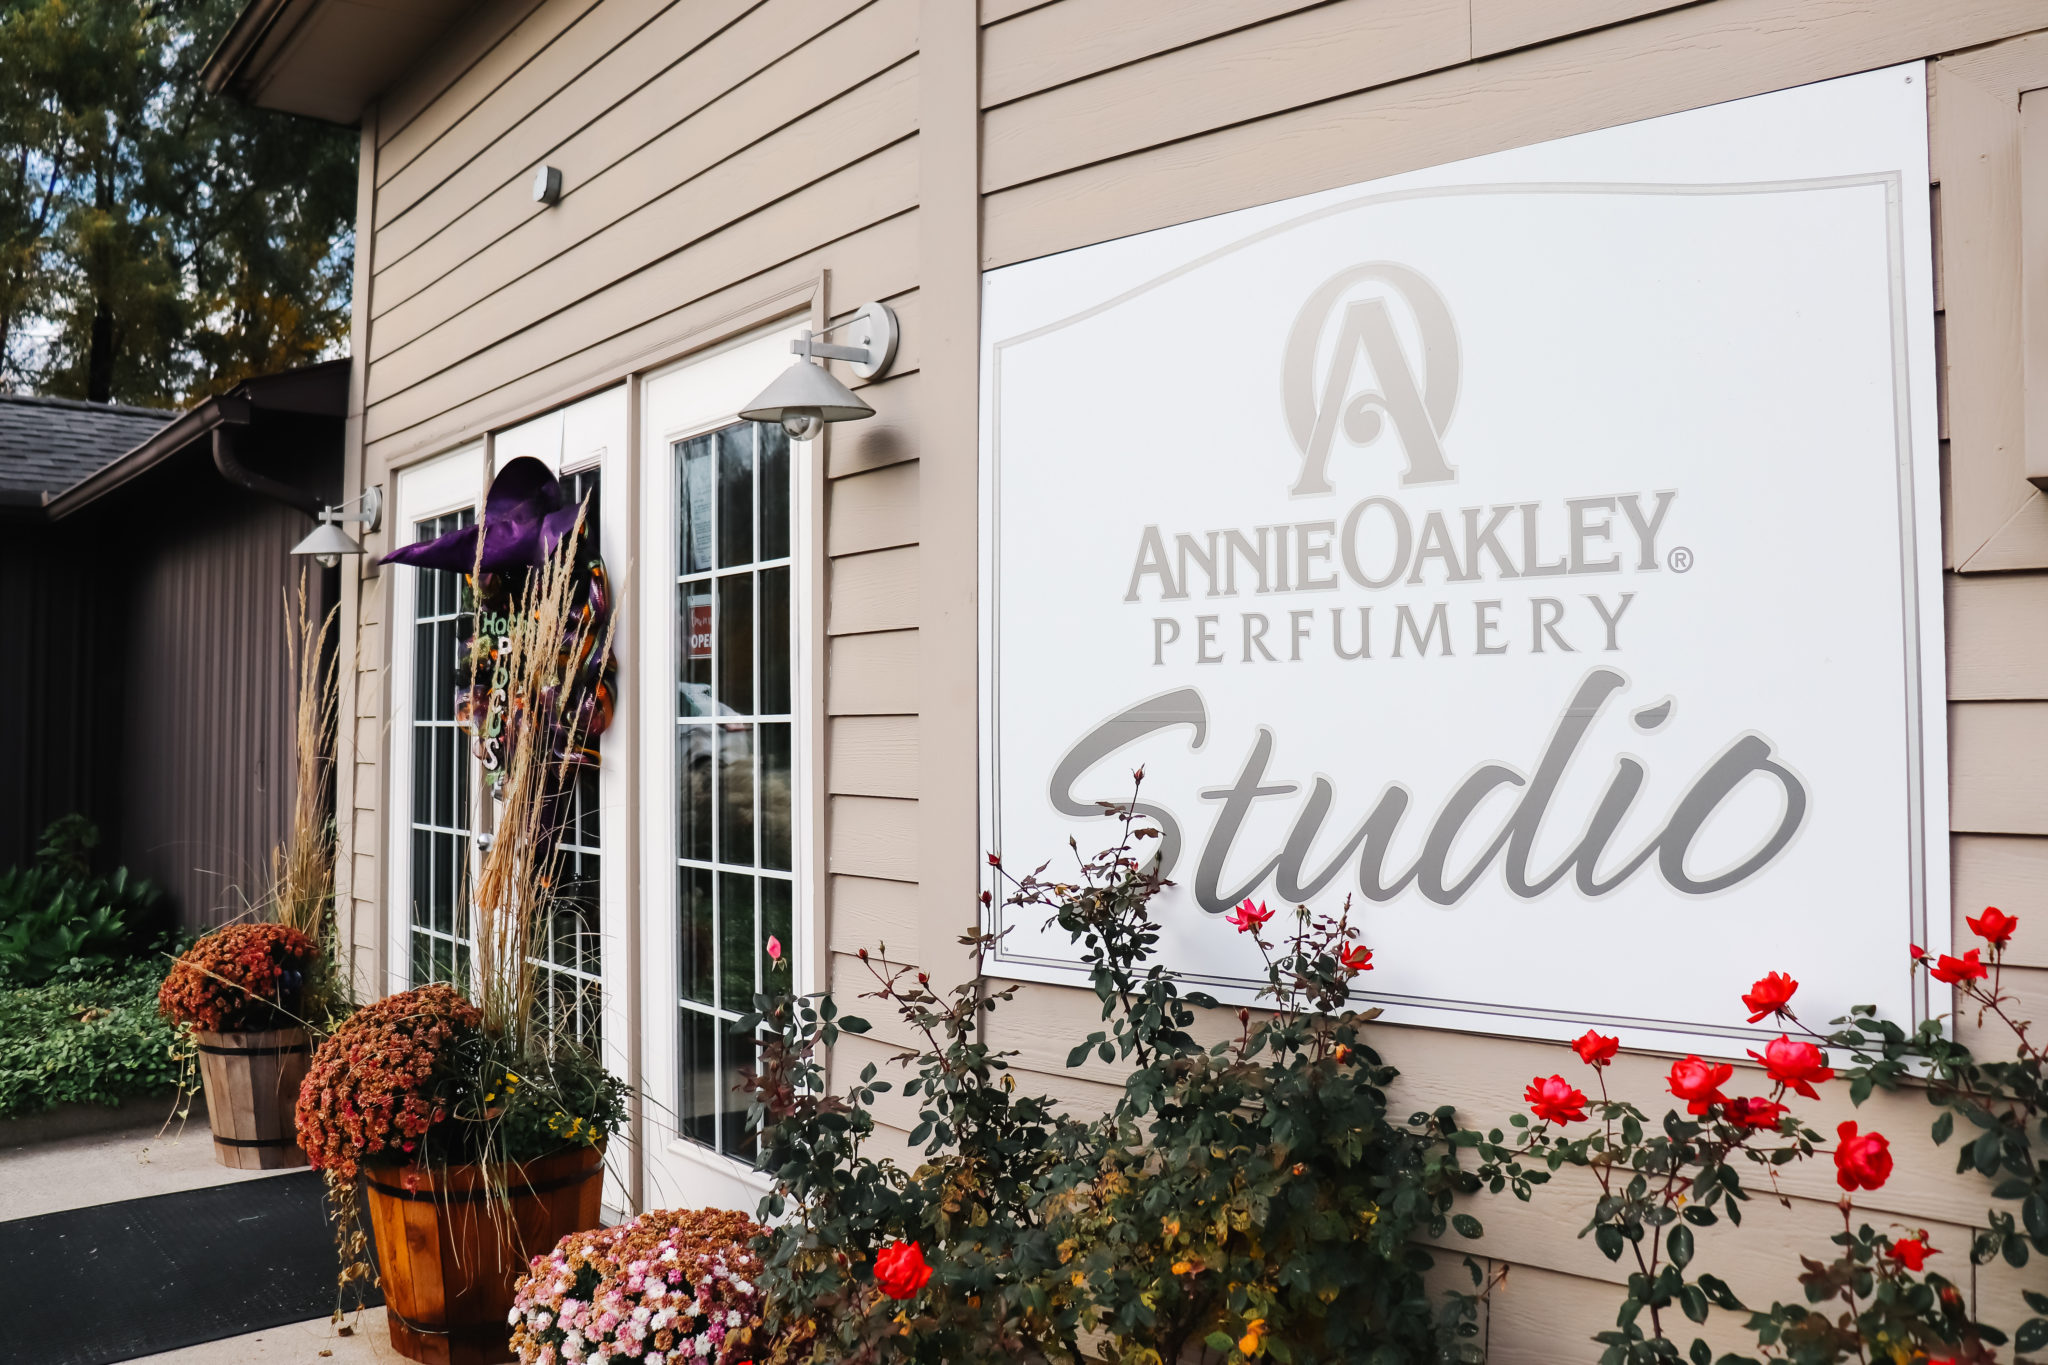 Annie Oakley Perfumery Studio - Towne Post Network